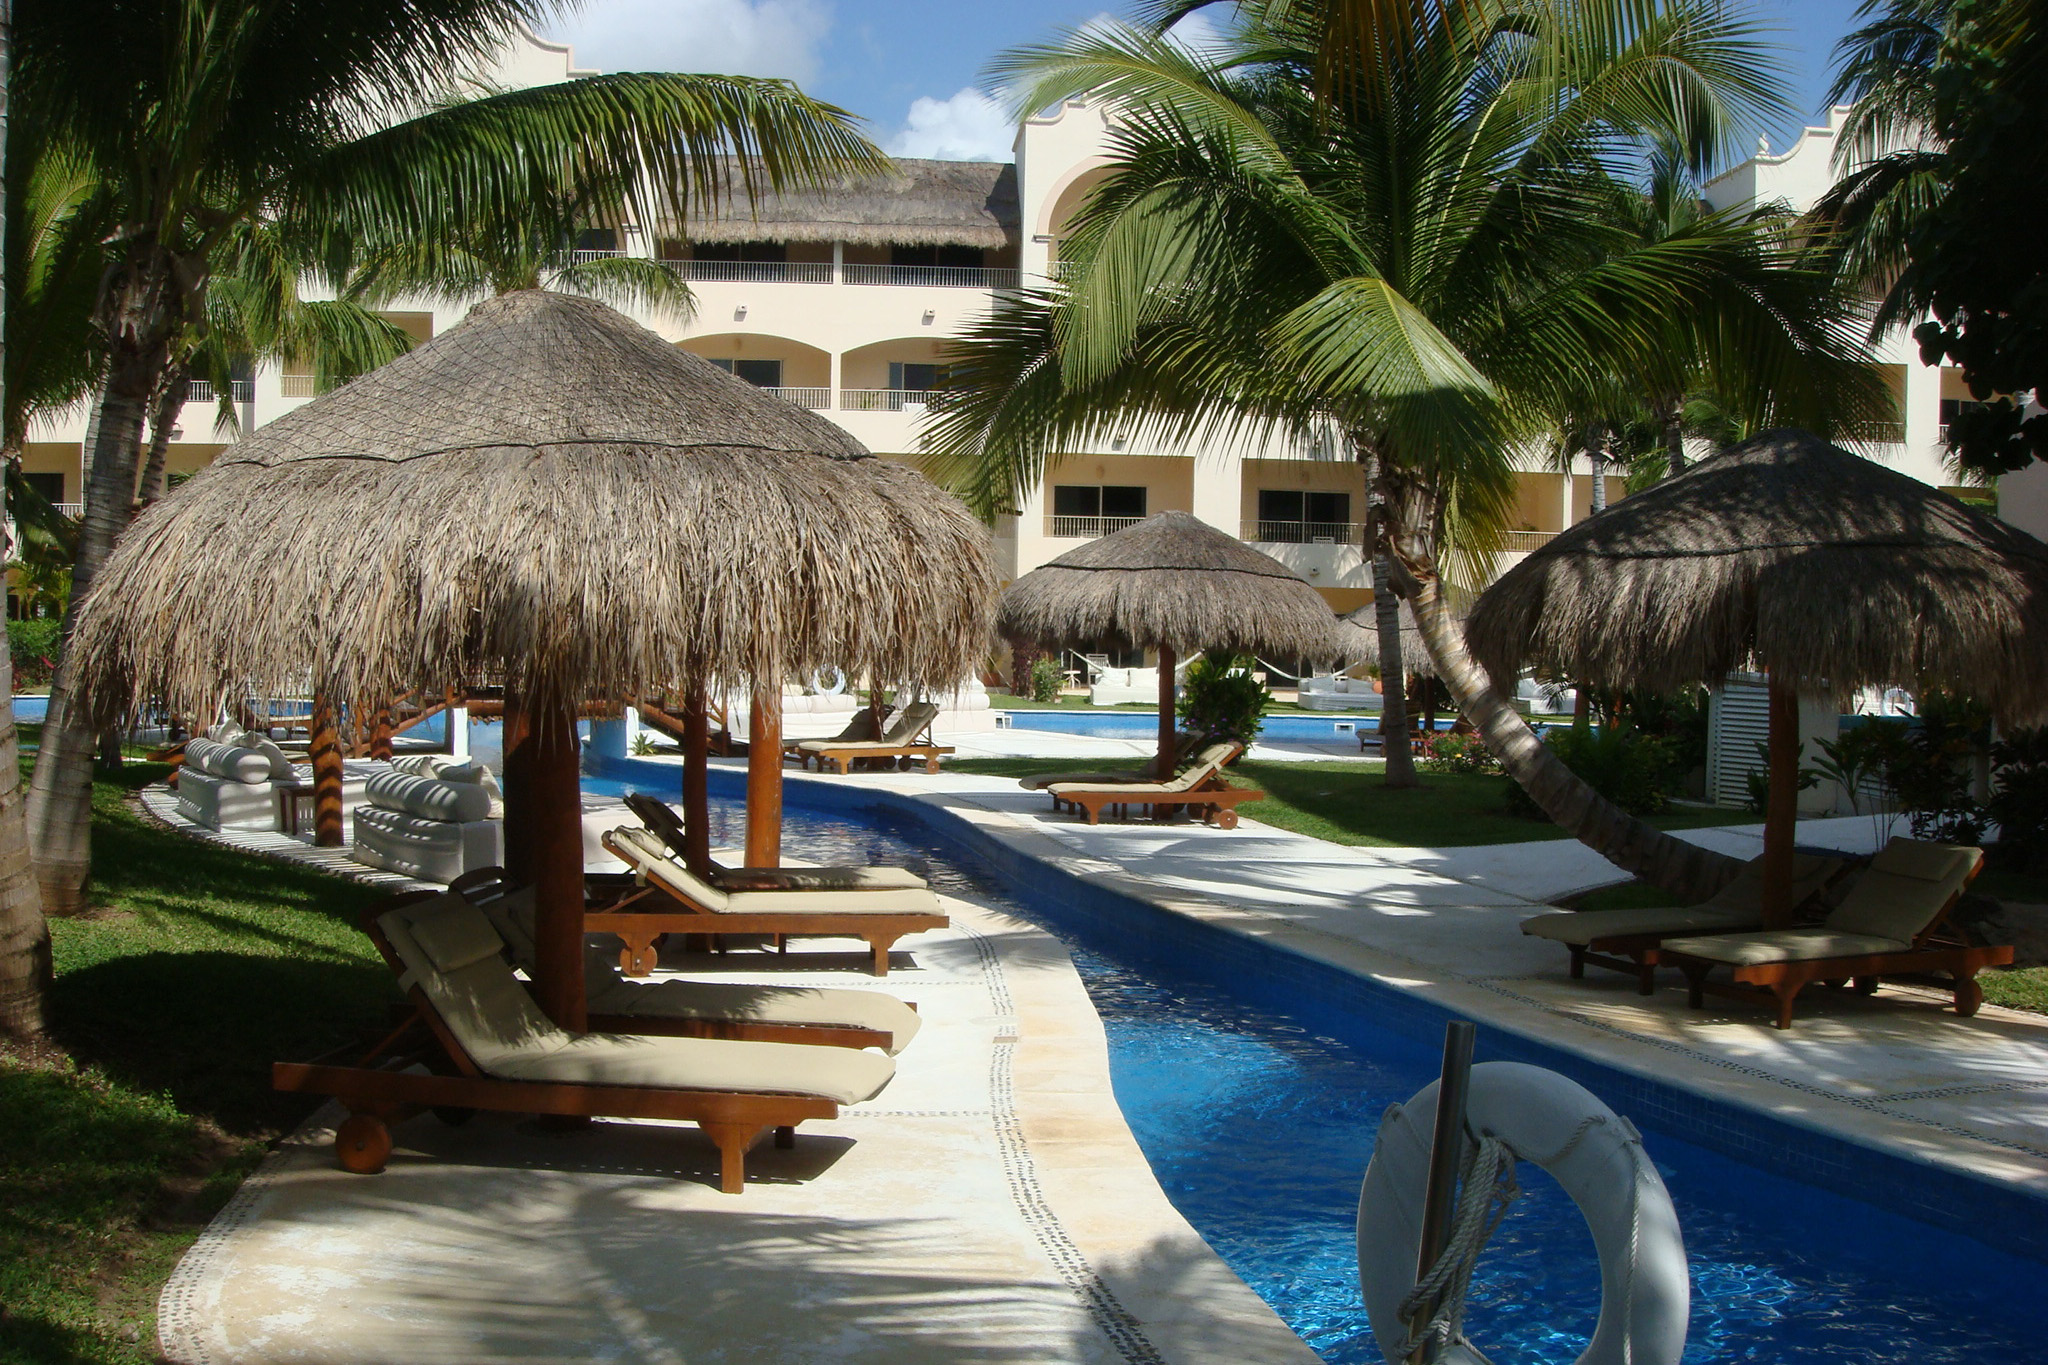 Excellence Riviera Cancun, Mexico